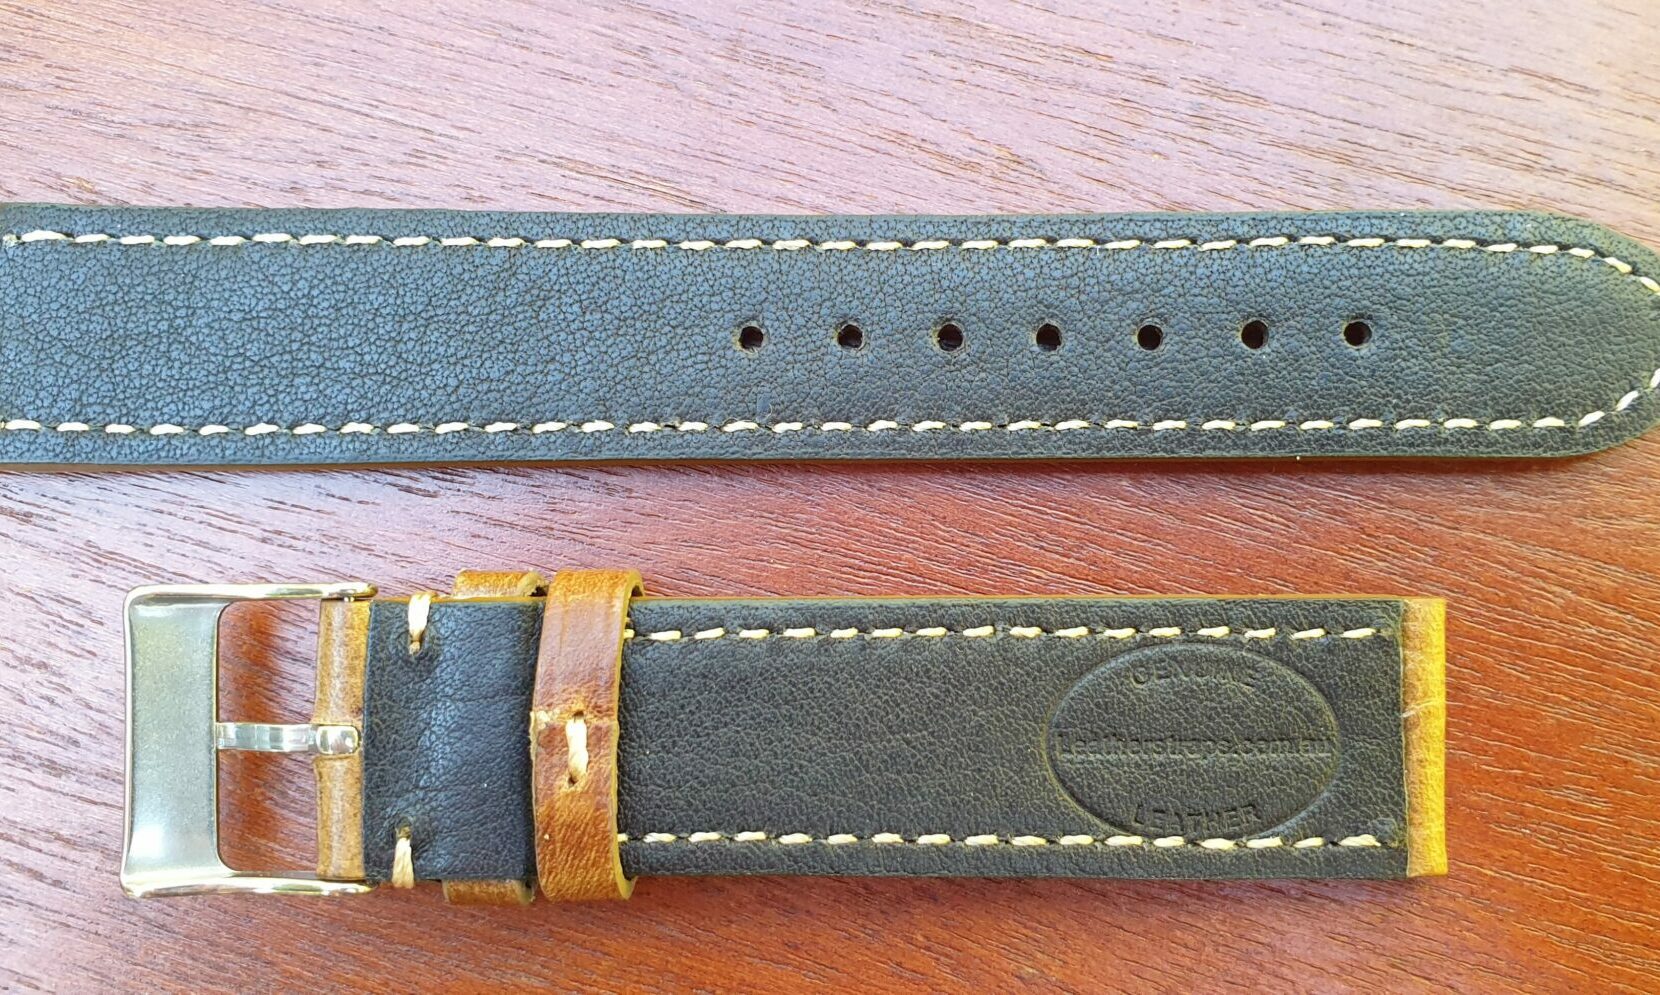 rear gf glenview leather strap showing branding